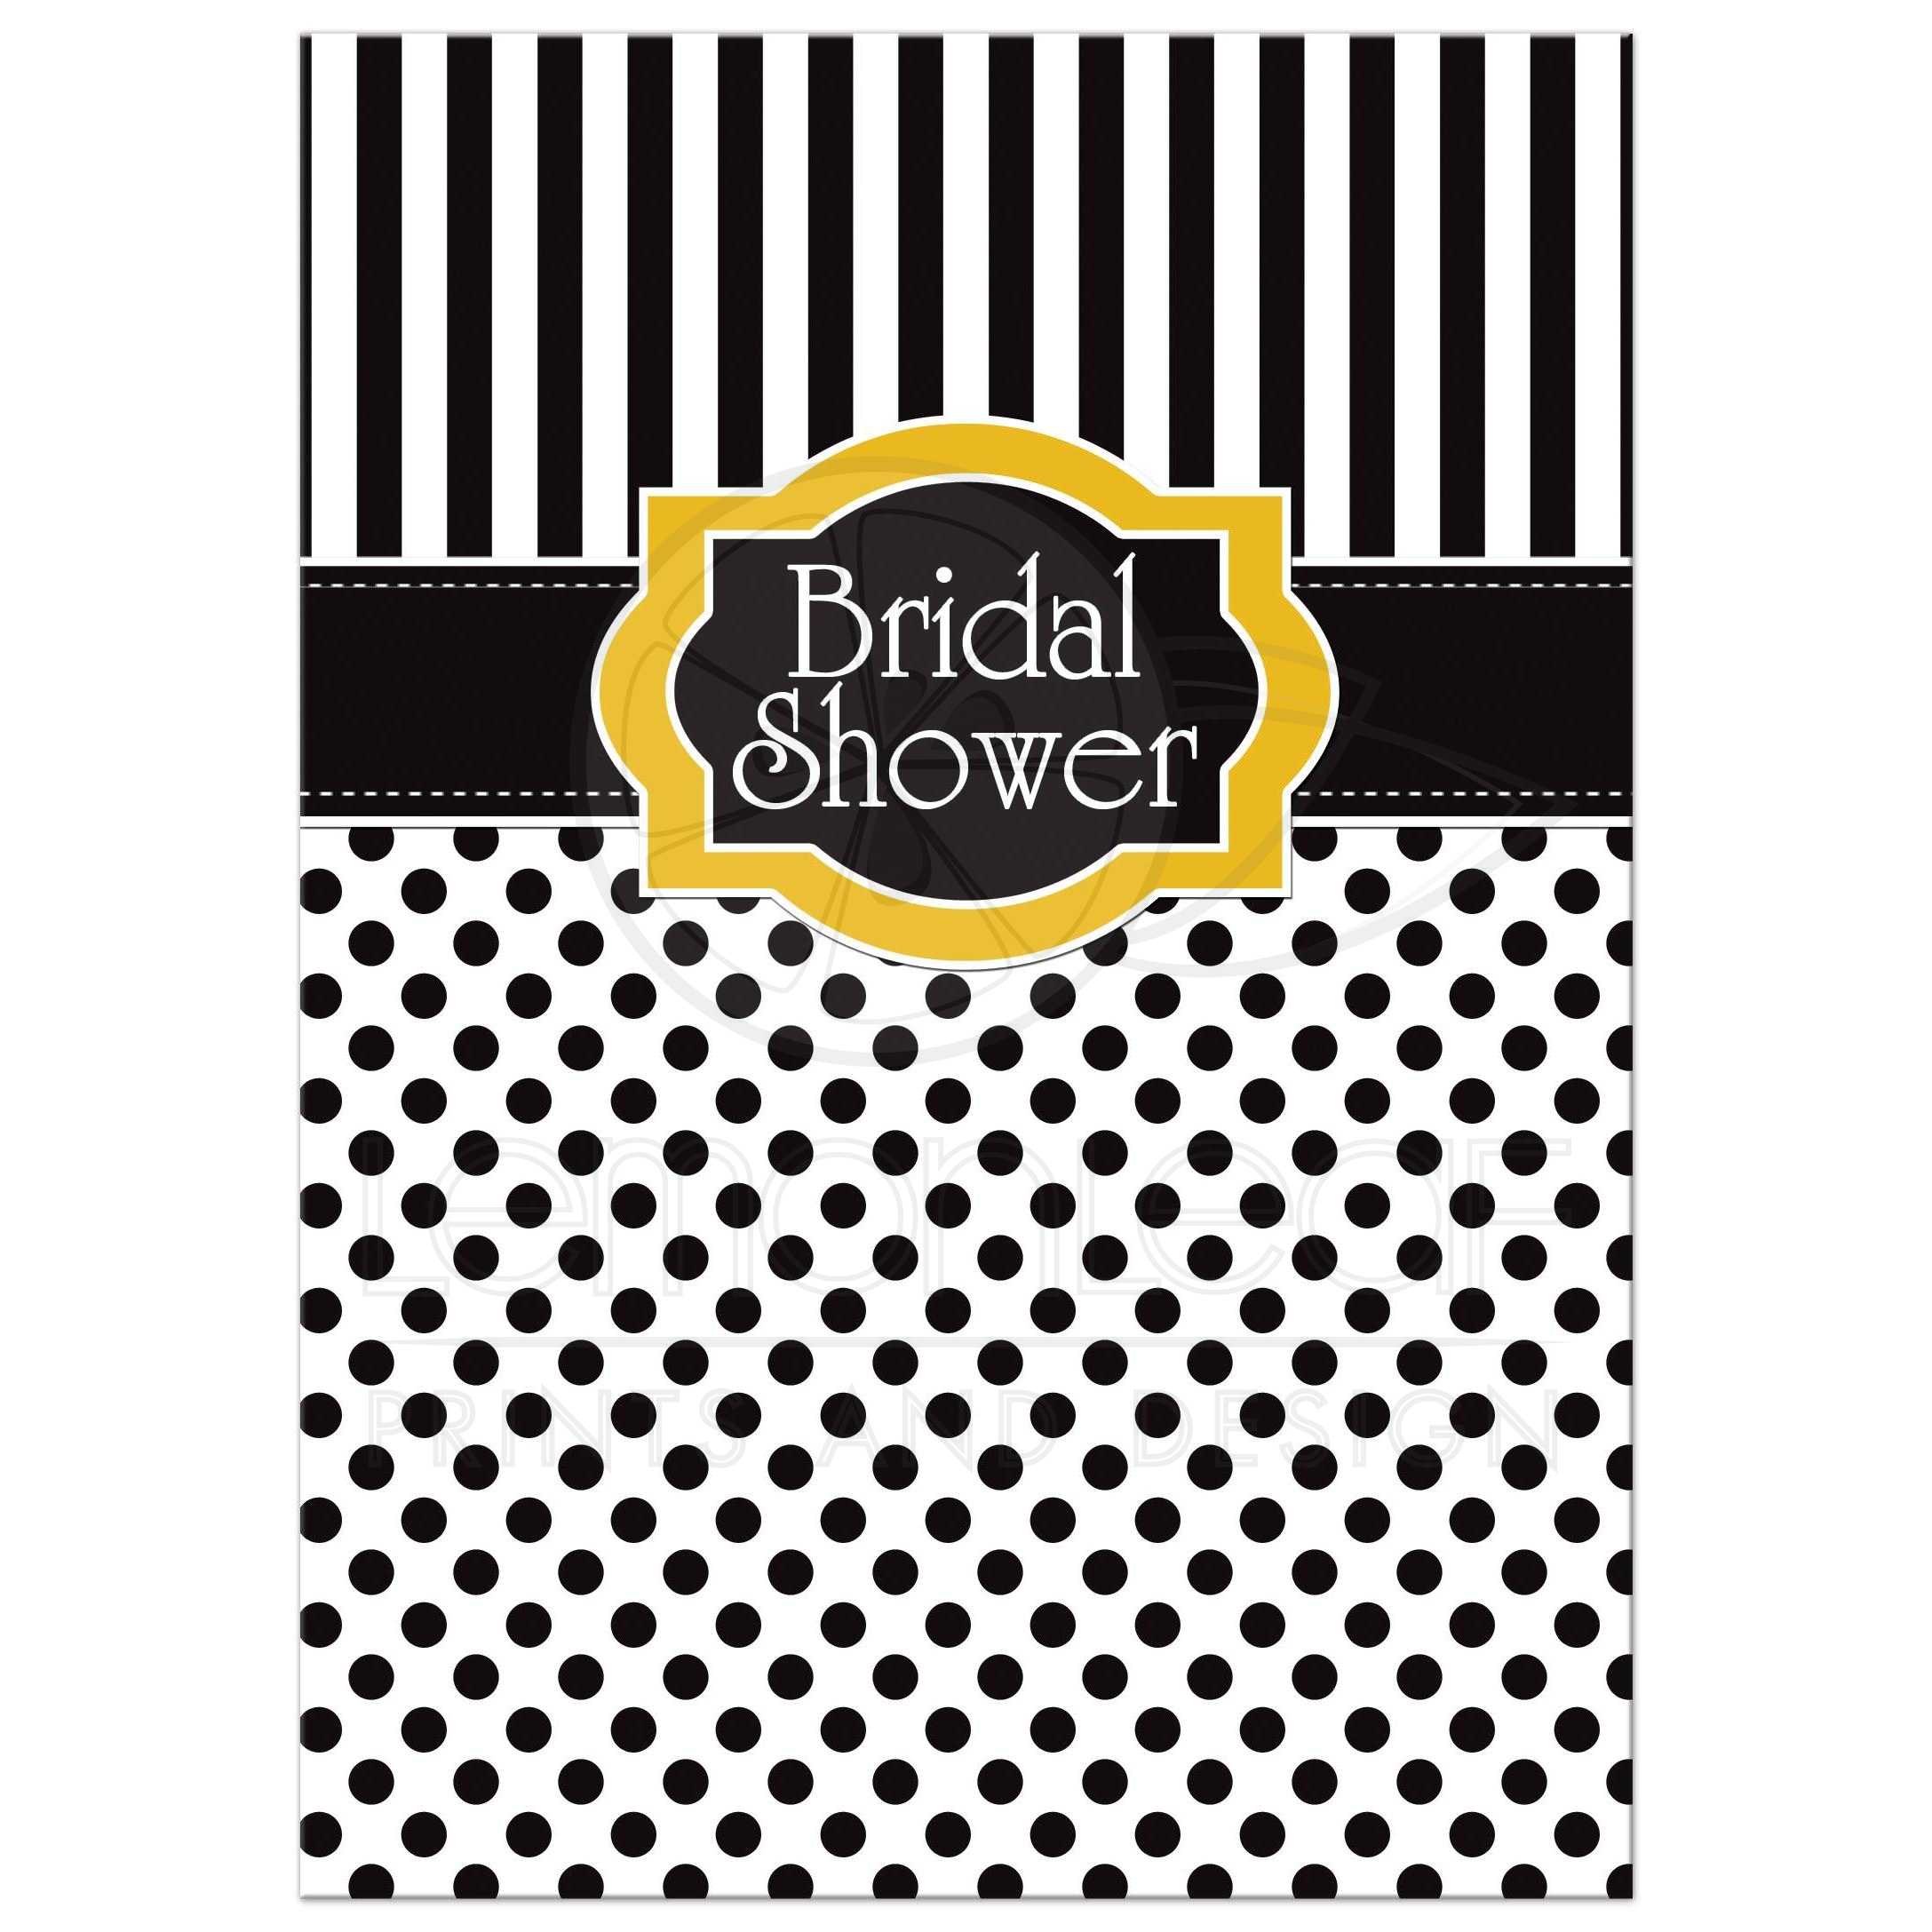 White Stripes with Yellow Logo - Bridal Shower Invitation. Black, White, Yellow. Polka Dots and Stripes